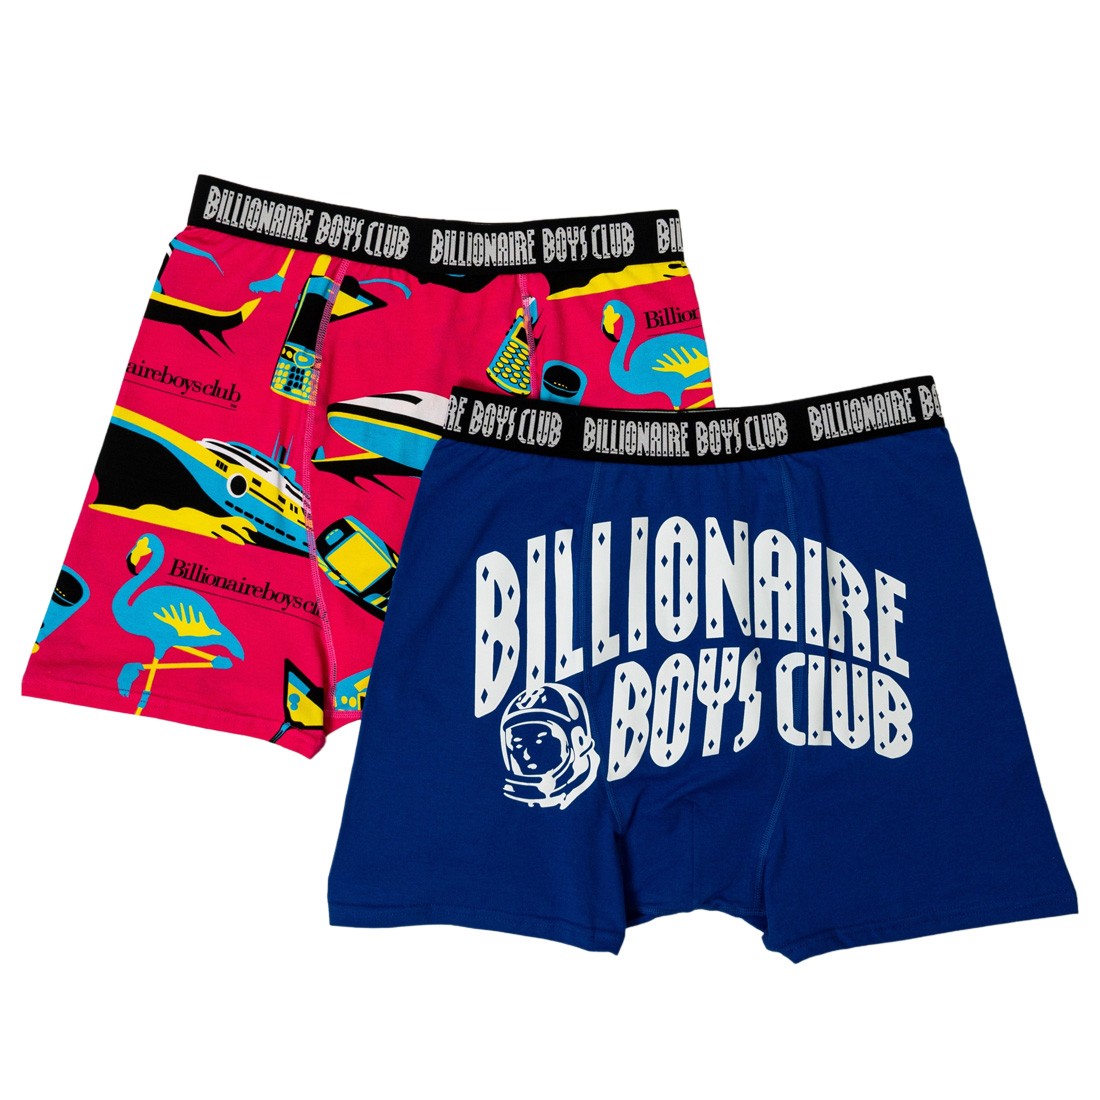 Billionaire Boys Club 821-8803-BLK Aurora Australis Balacalva Mens